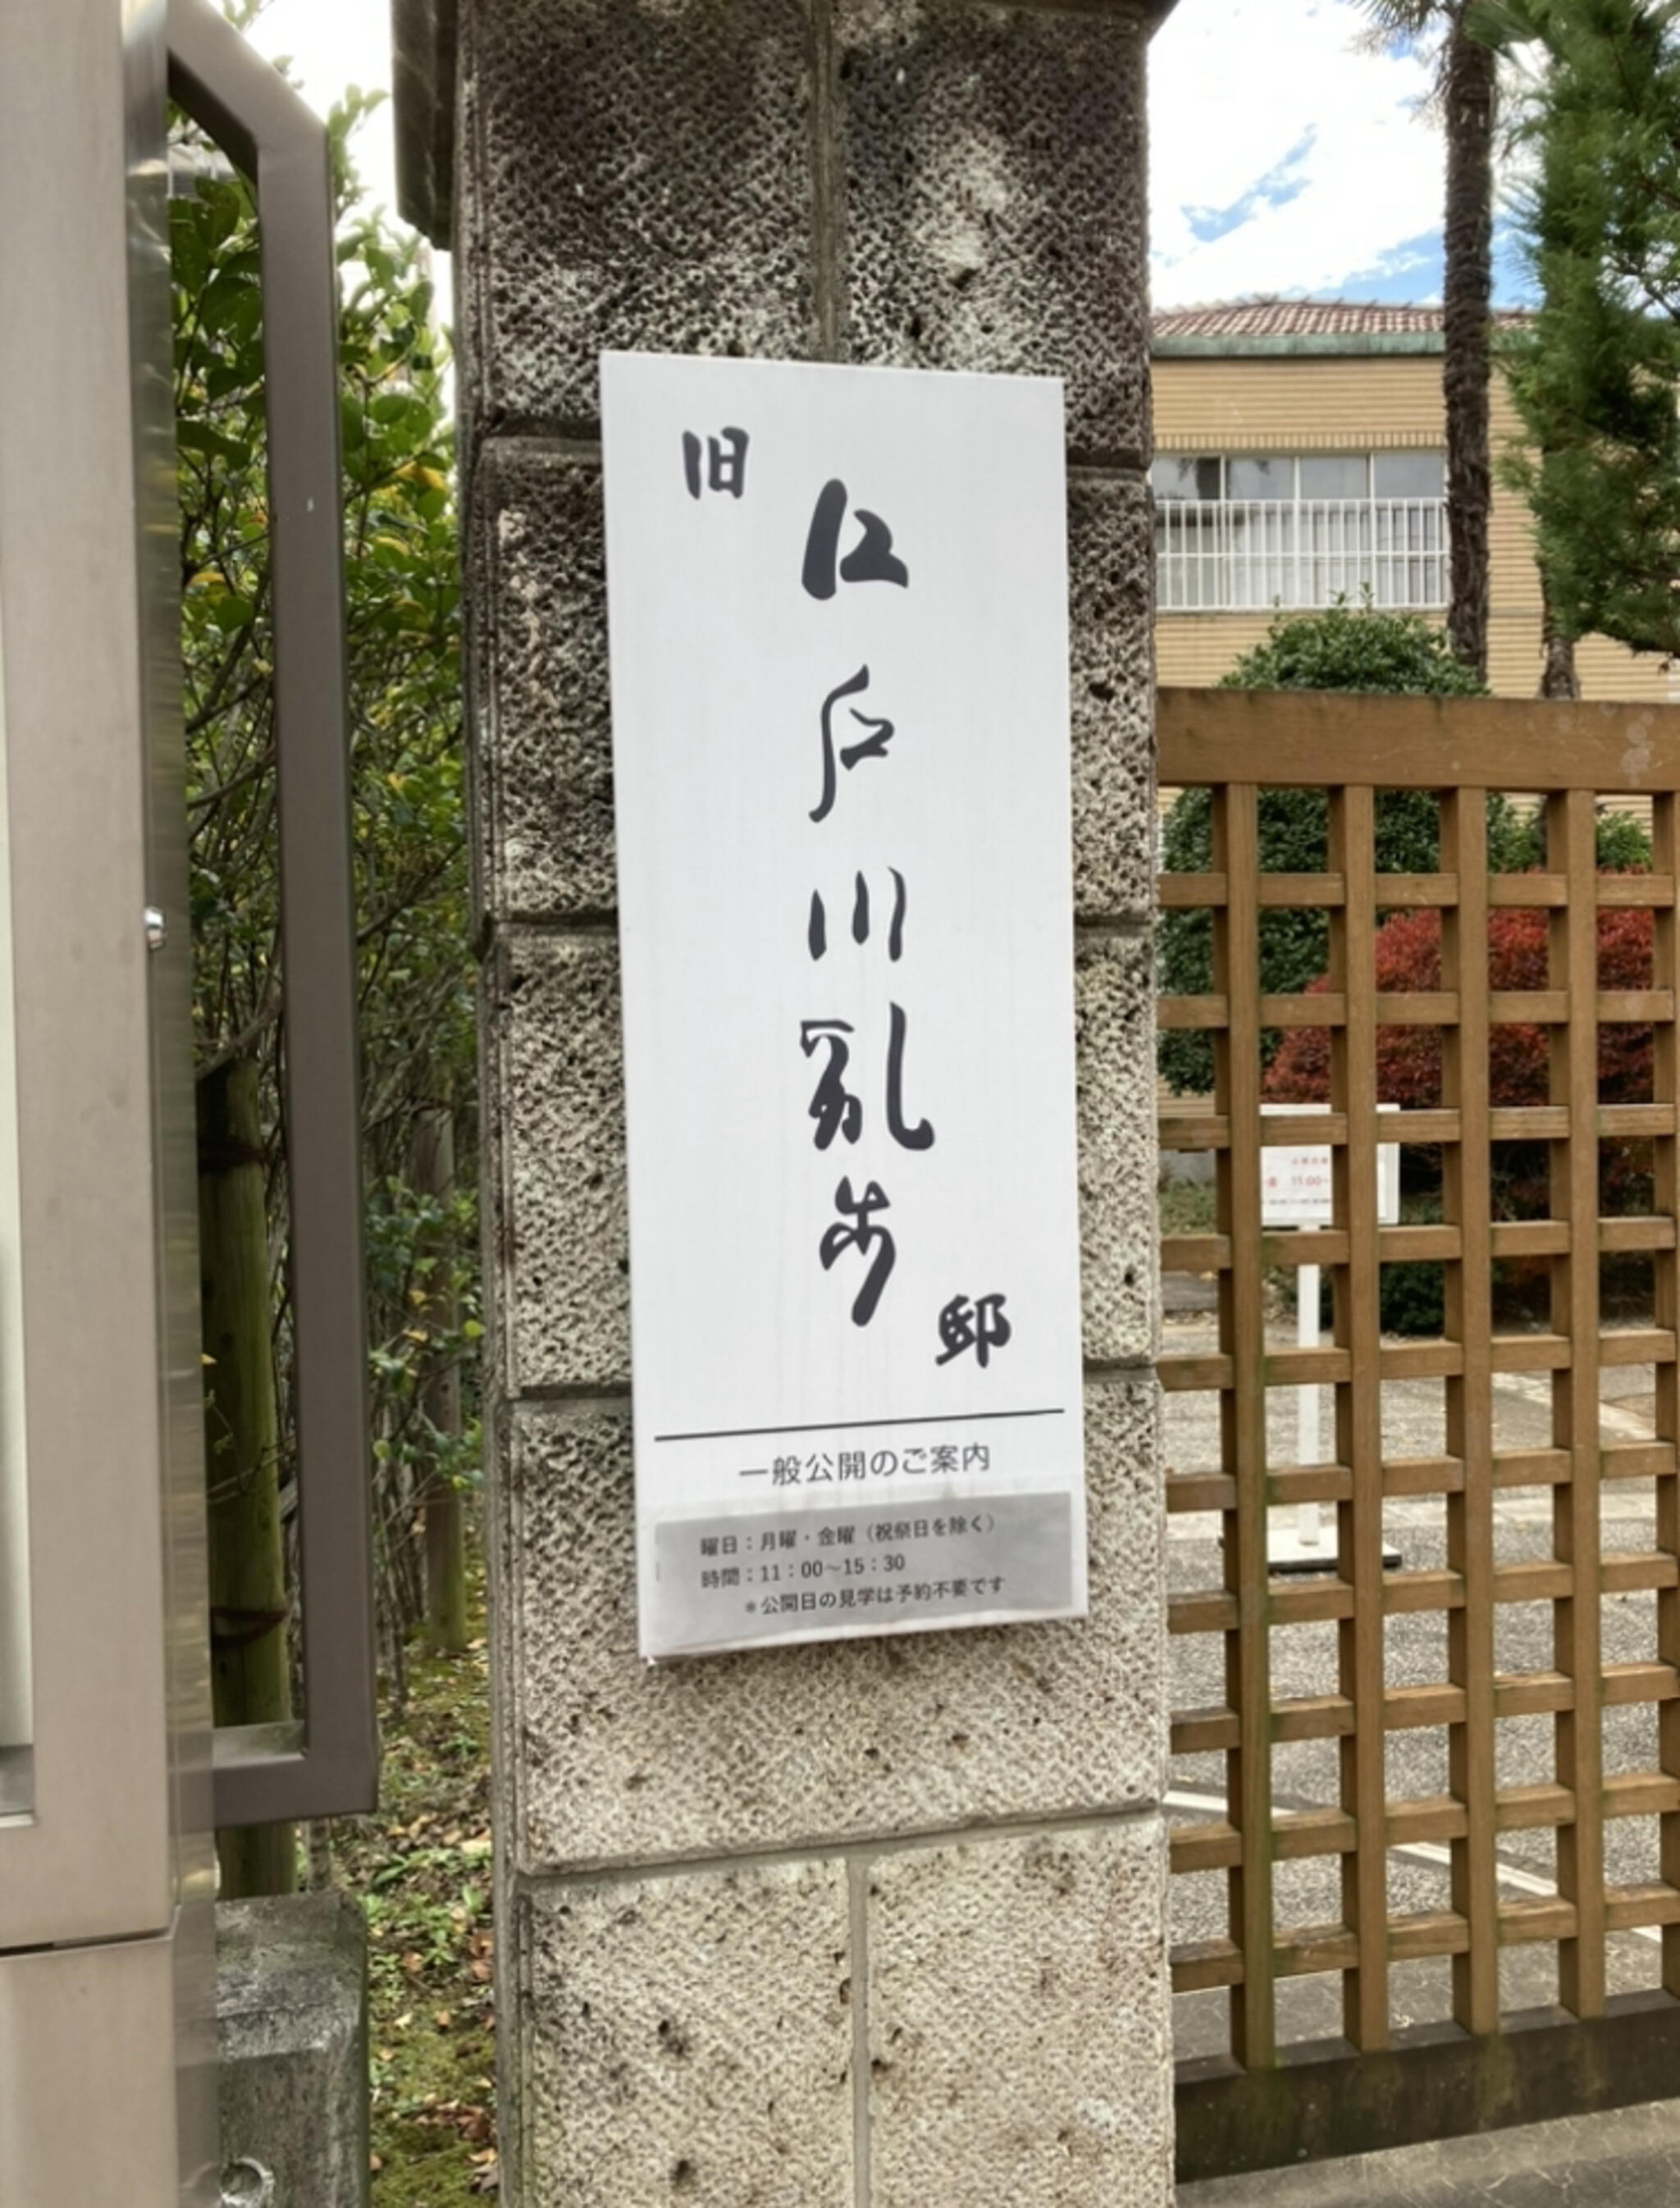 大衆文化研究センター(旧江戸川乱歩邸)の代表写真2